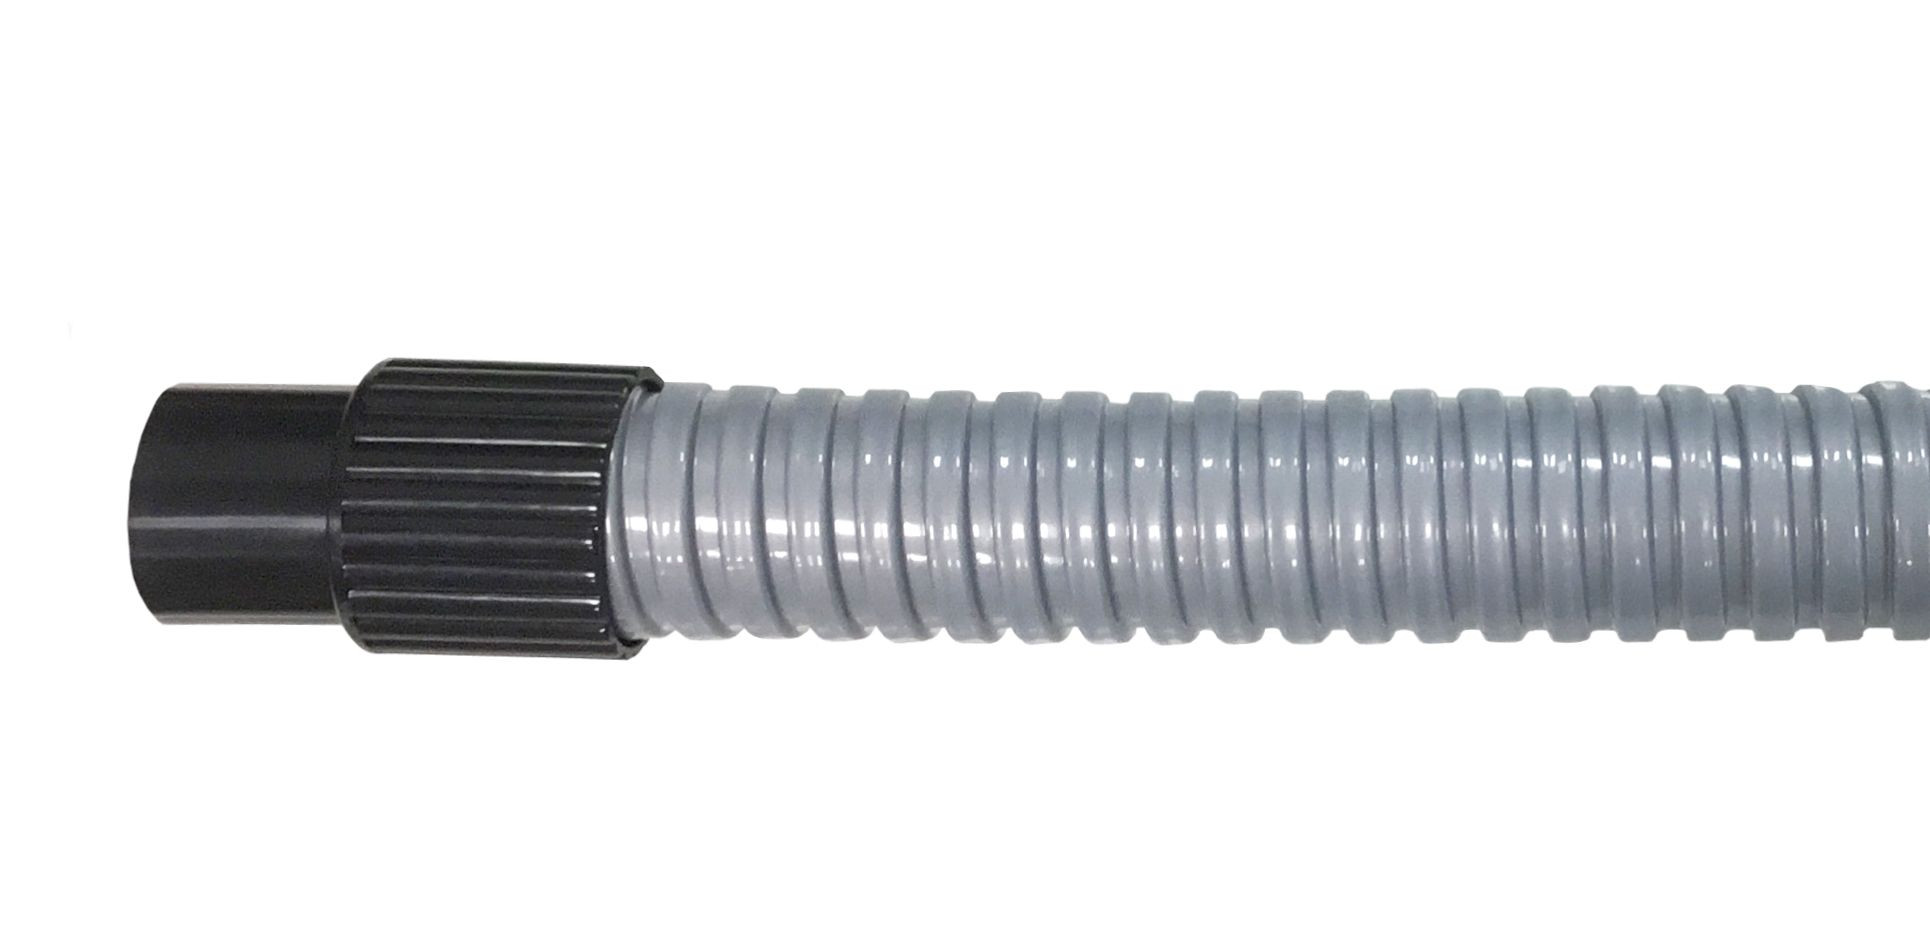 Tubo metallico di ricambio per aspiraceneri Minicen - Cenerill - Cenehot,  offerta vendita online